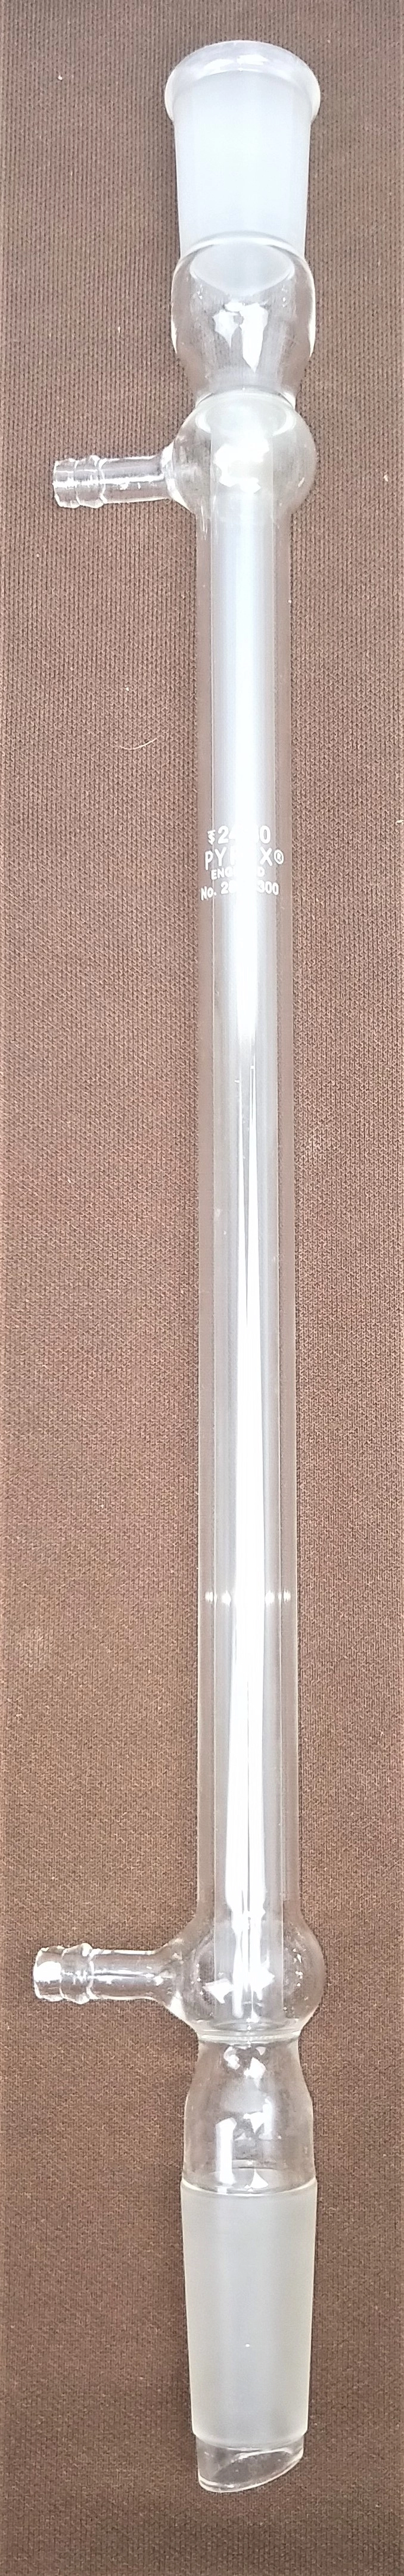 Corning PYREX 2800-300 / Kimble KIMAX 18190 Liebig-West Condenser - 300mm